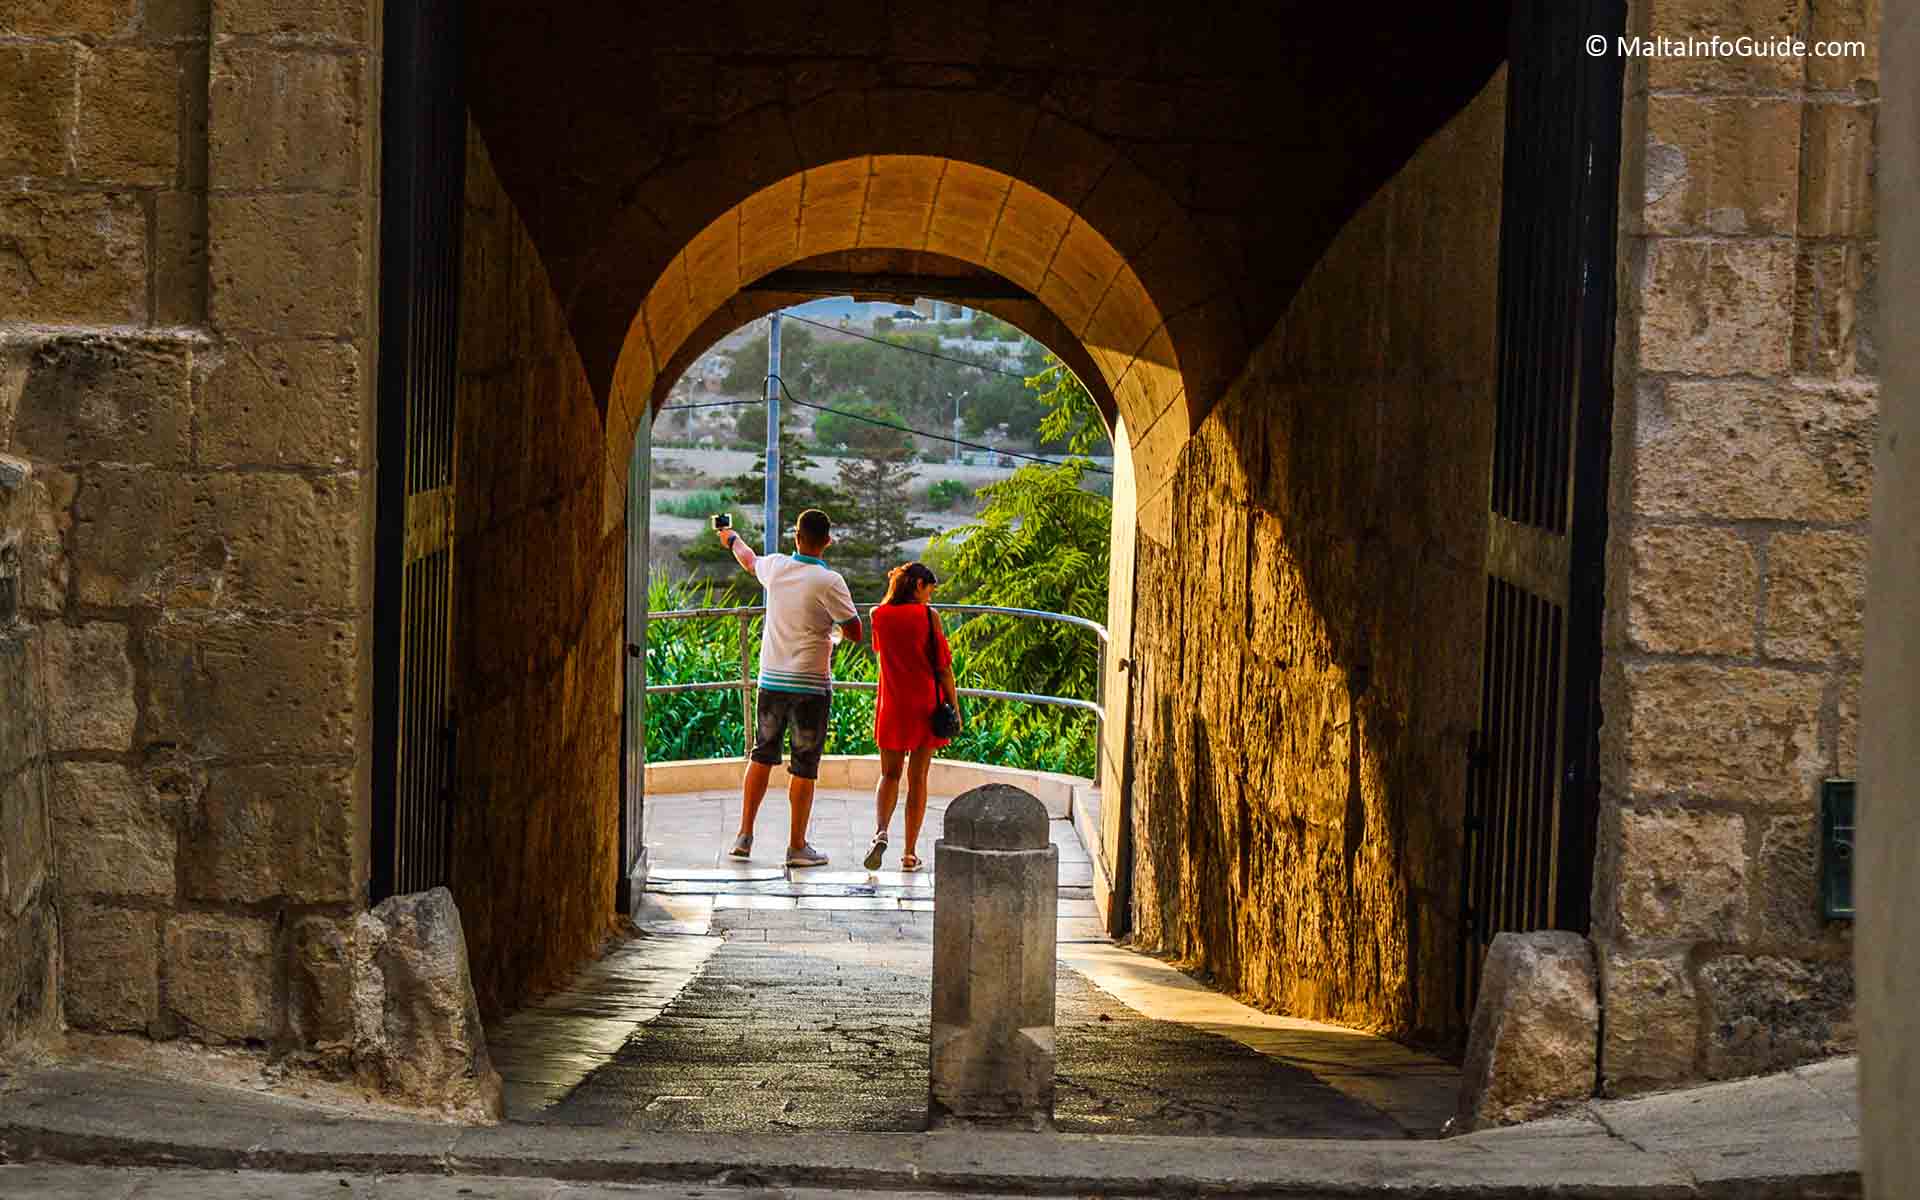 Two people walking down Gharreqin gate.